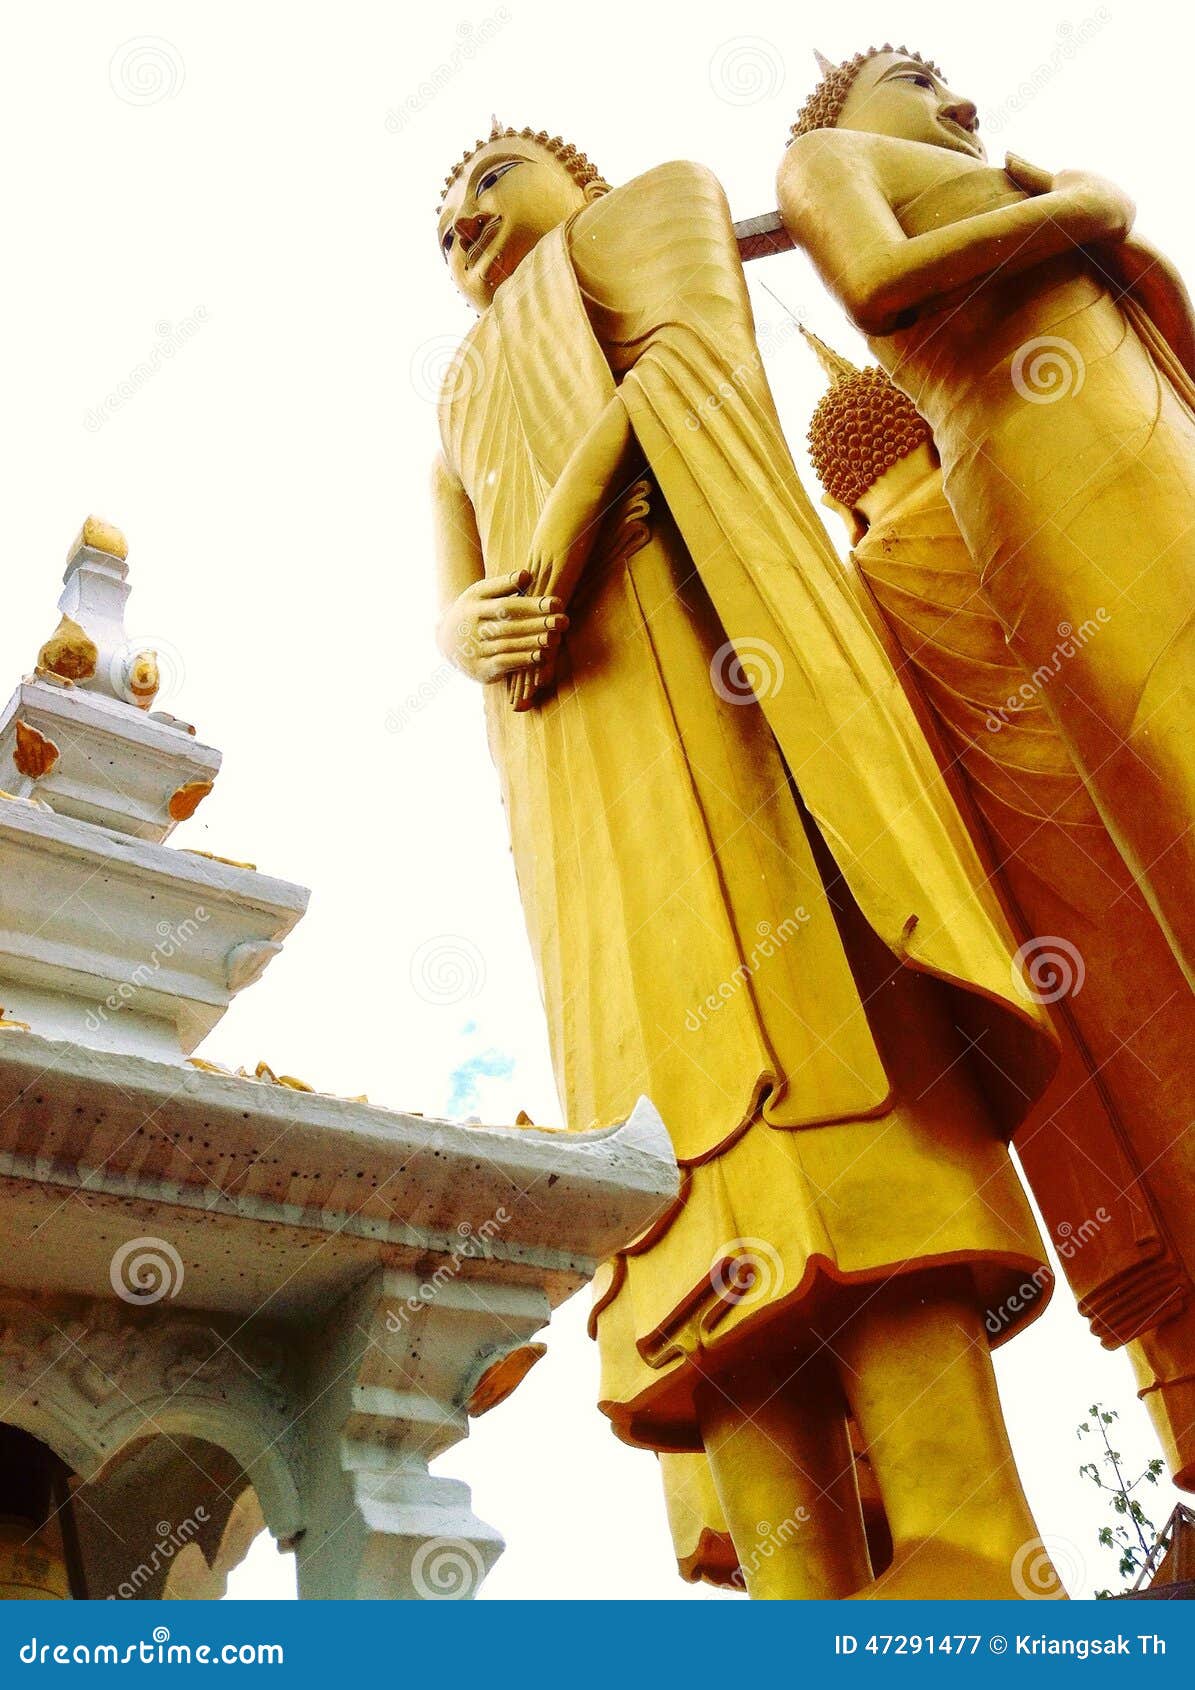 Three Buddha Images Standing Elegantly on The